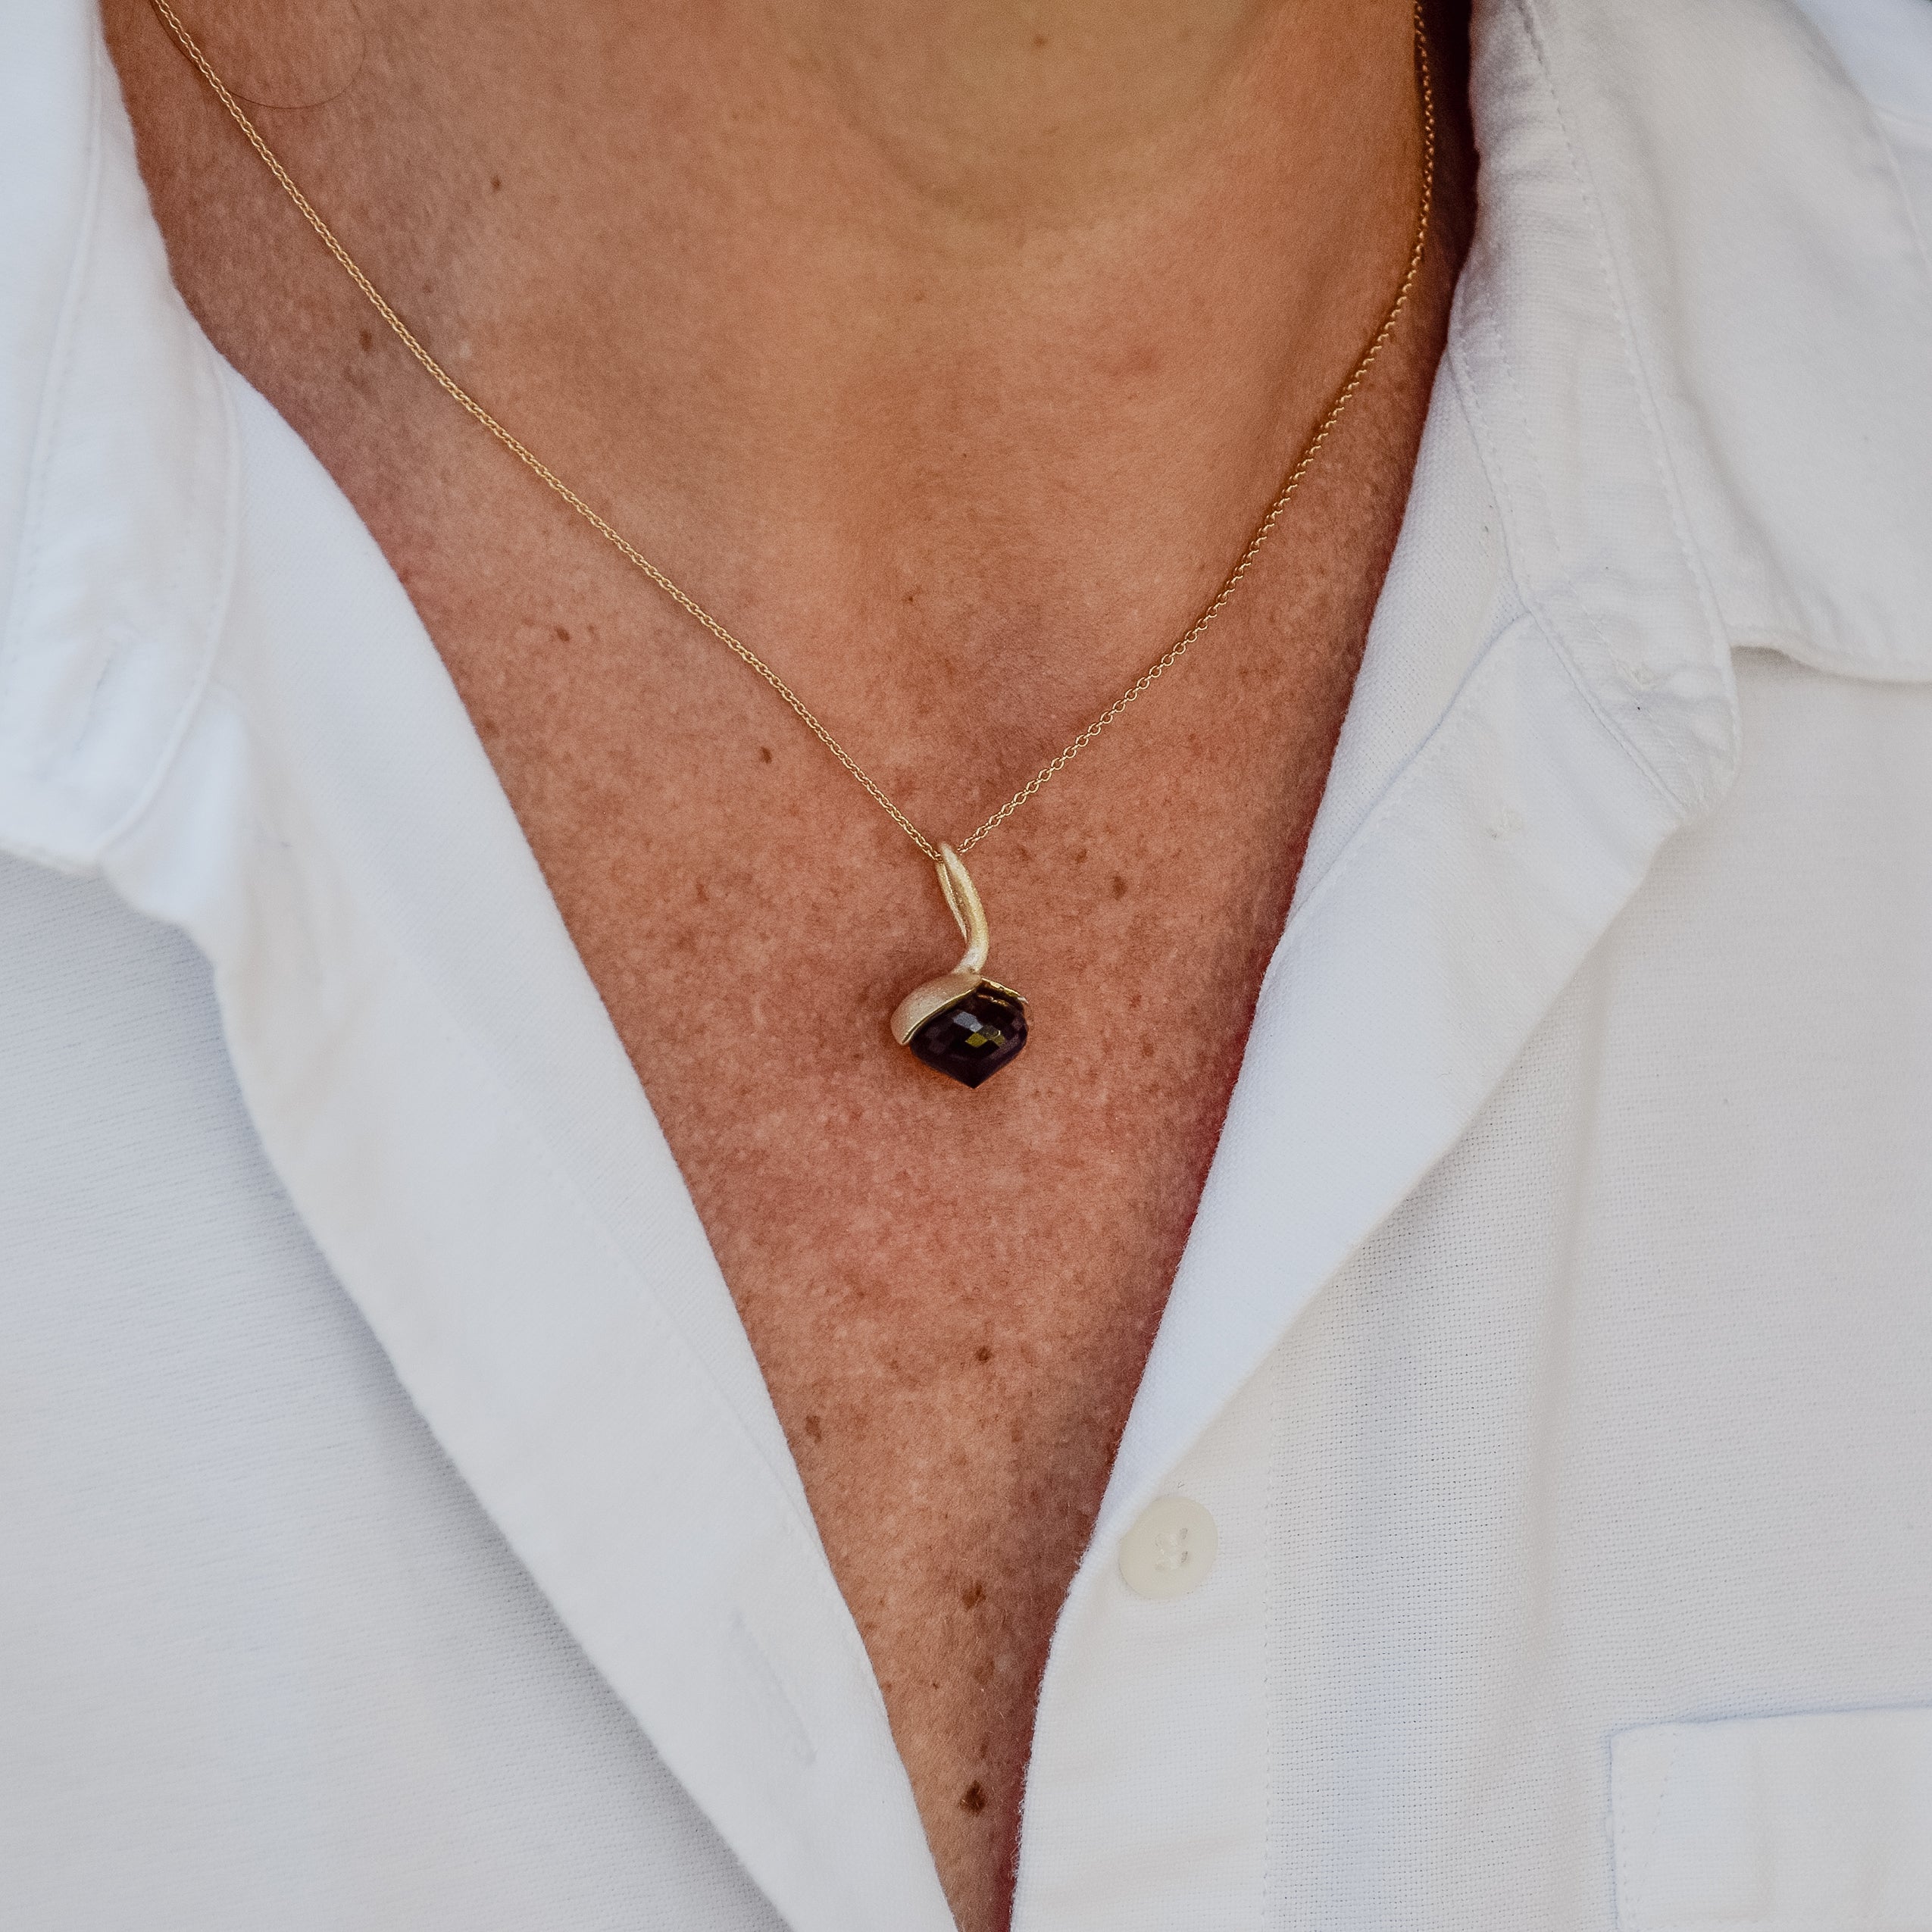 Dolce pendant "medium" with smoky quartz 925/-